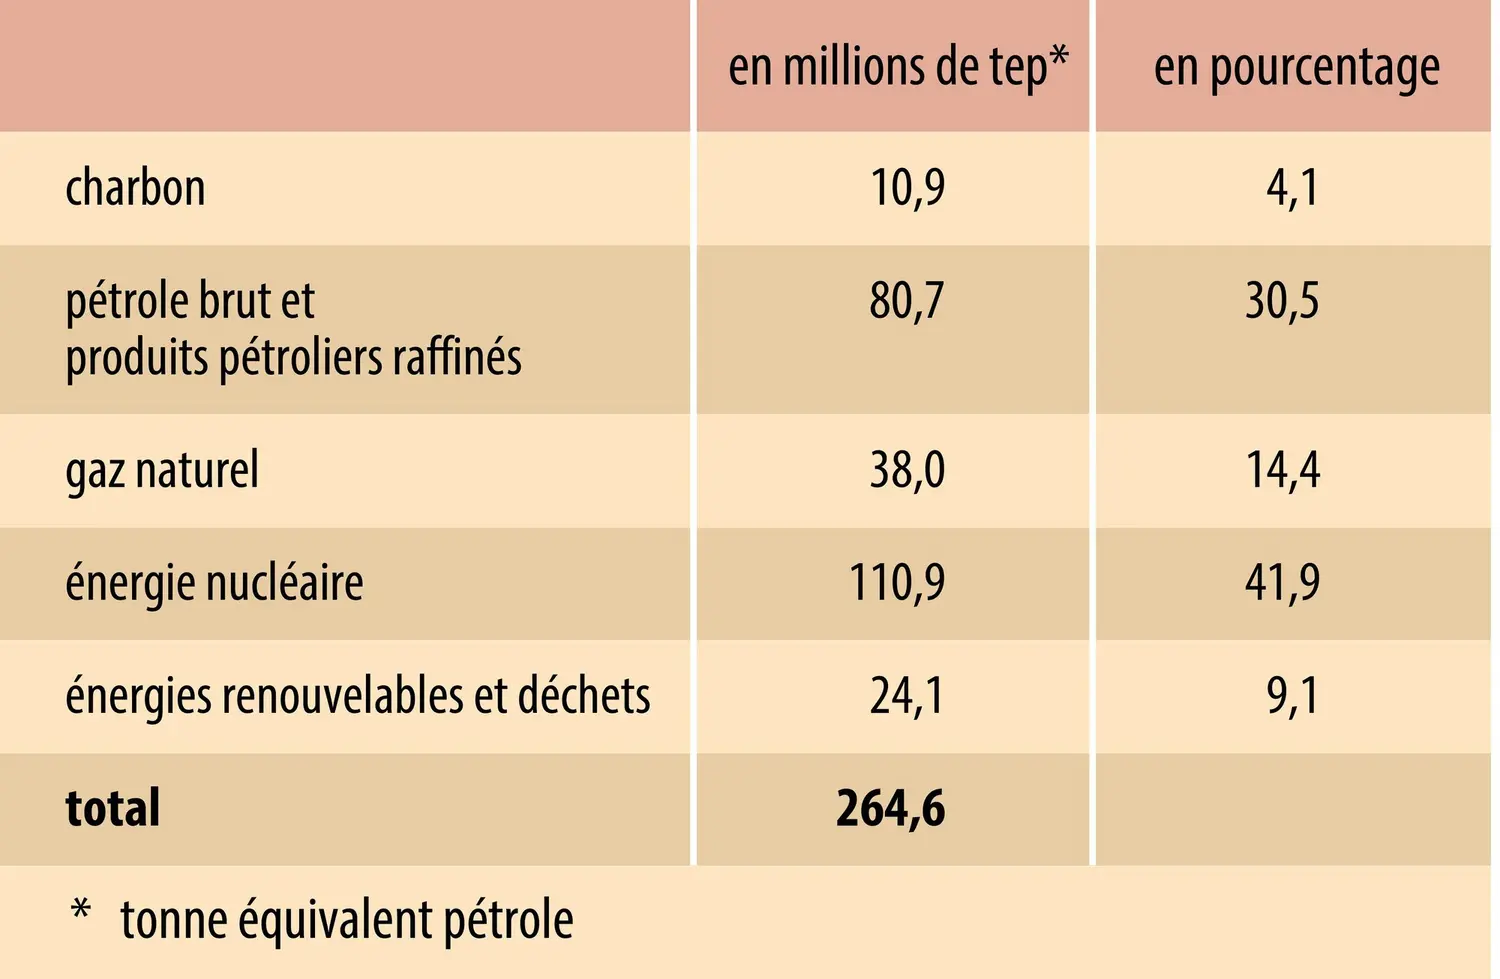 Bilan énergétique de la France en 2012